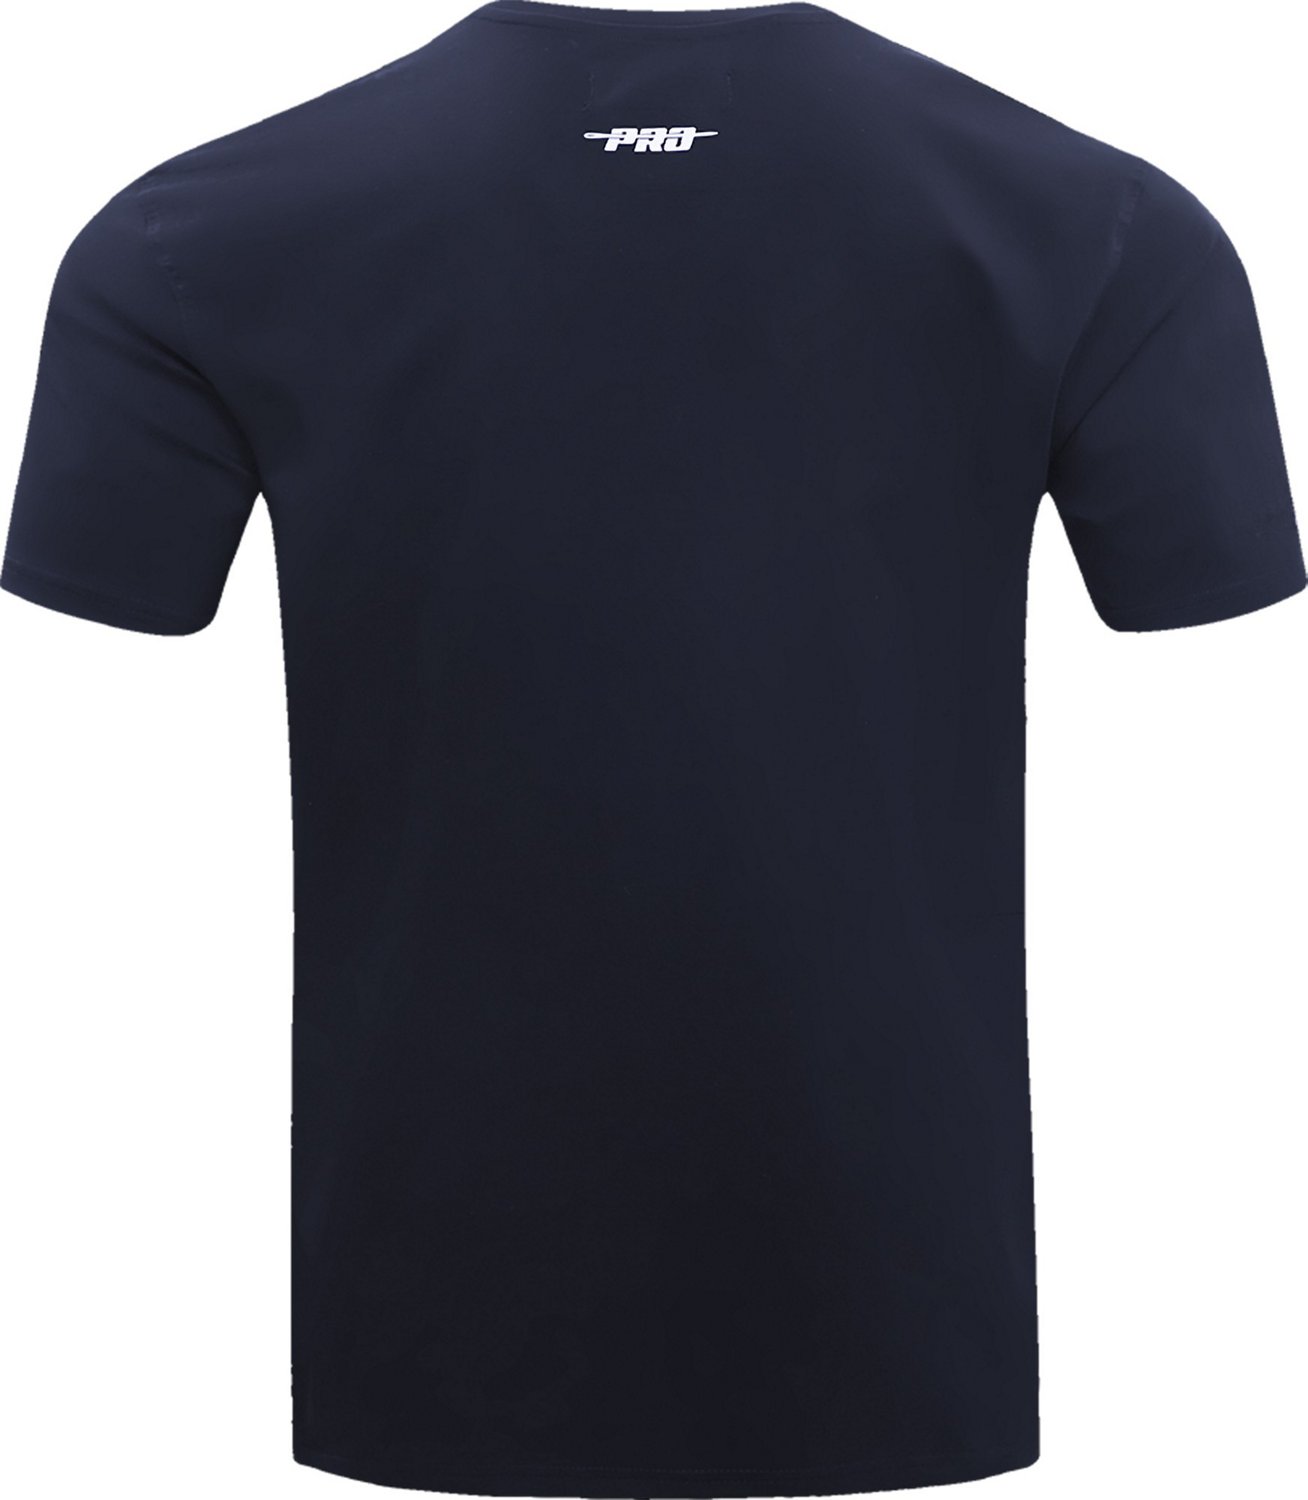 Men's Pro Standard Camo Kansas City Royals Team T-Shirt Size: Large